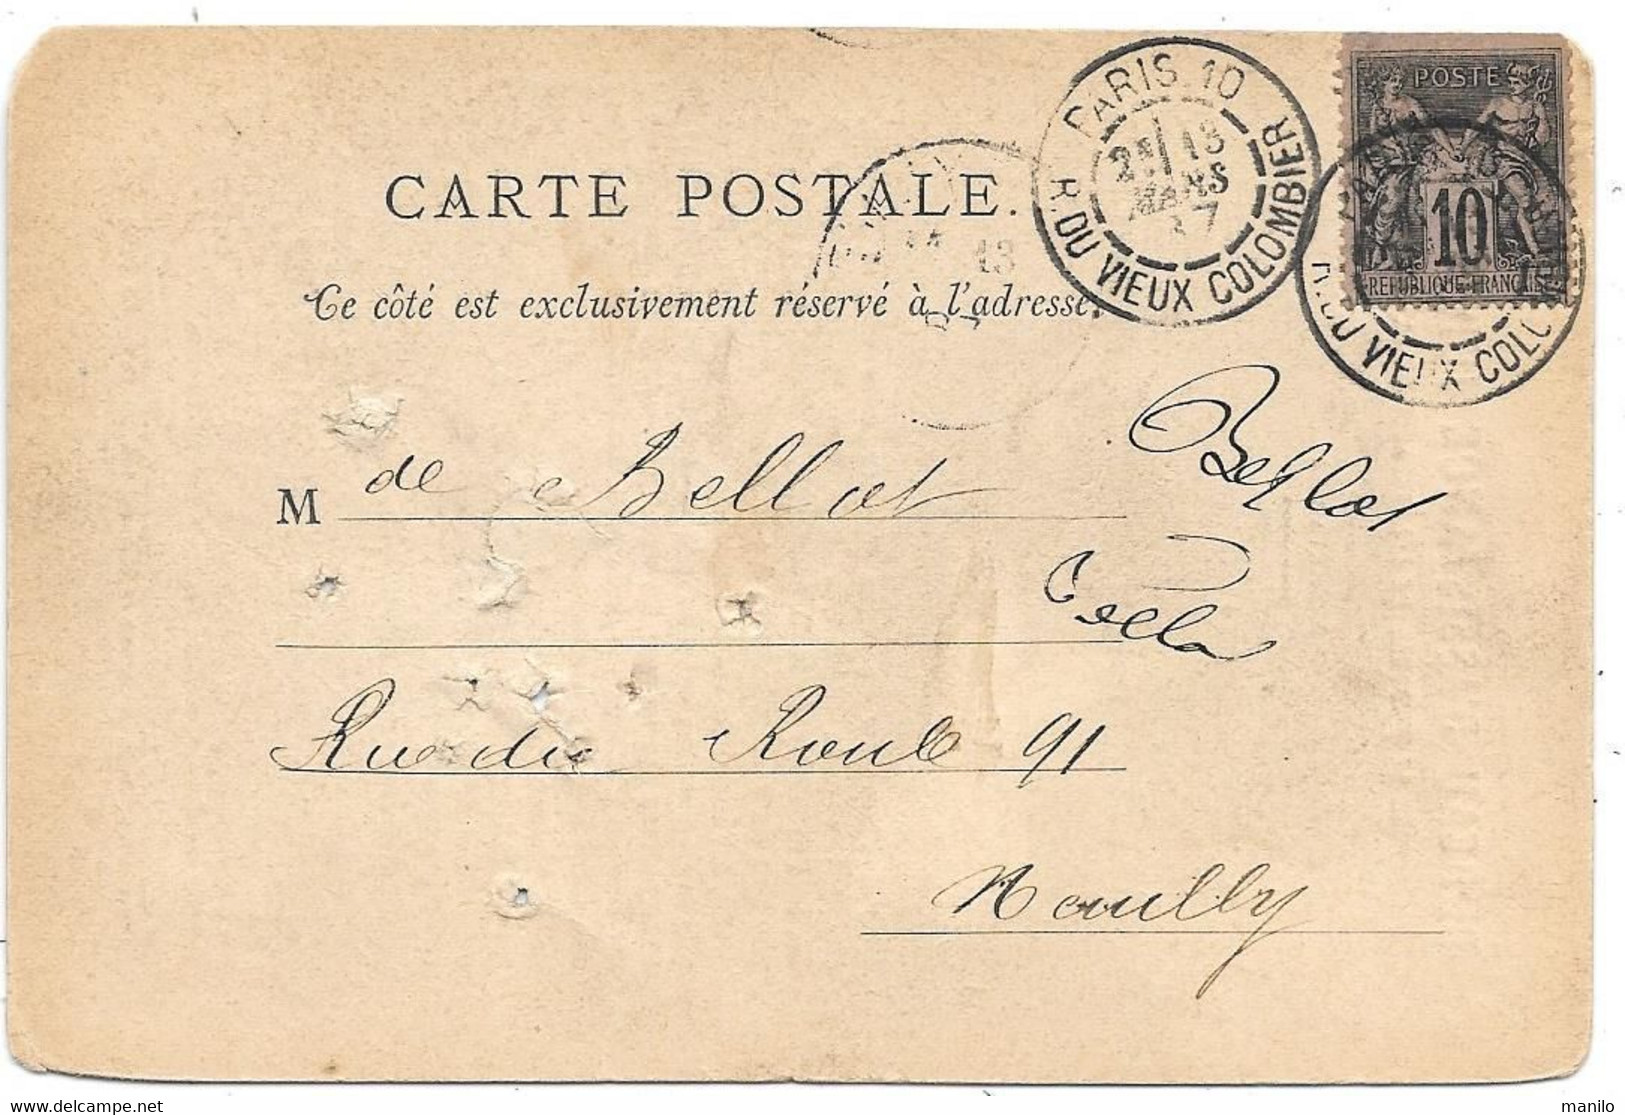 Carte Précurseur Repiquage BUREAU ASSISTANCE JUDICIAIRE 1887 (Refus) Timbre Type SAGE  Paris - Neuilly S/seine -65542 - Vorläufer